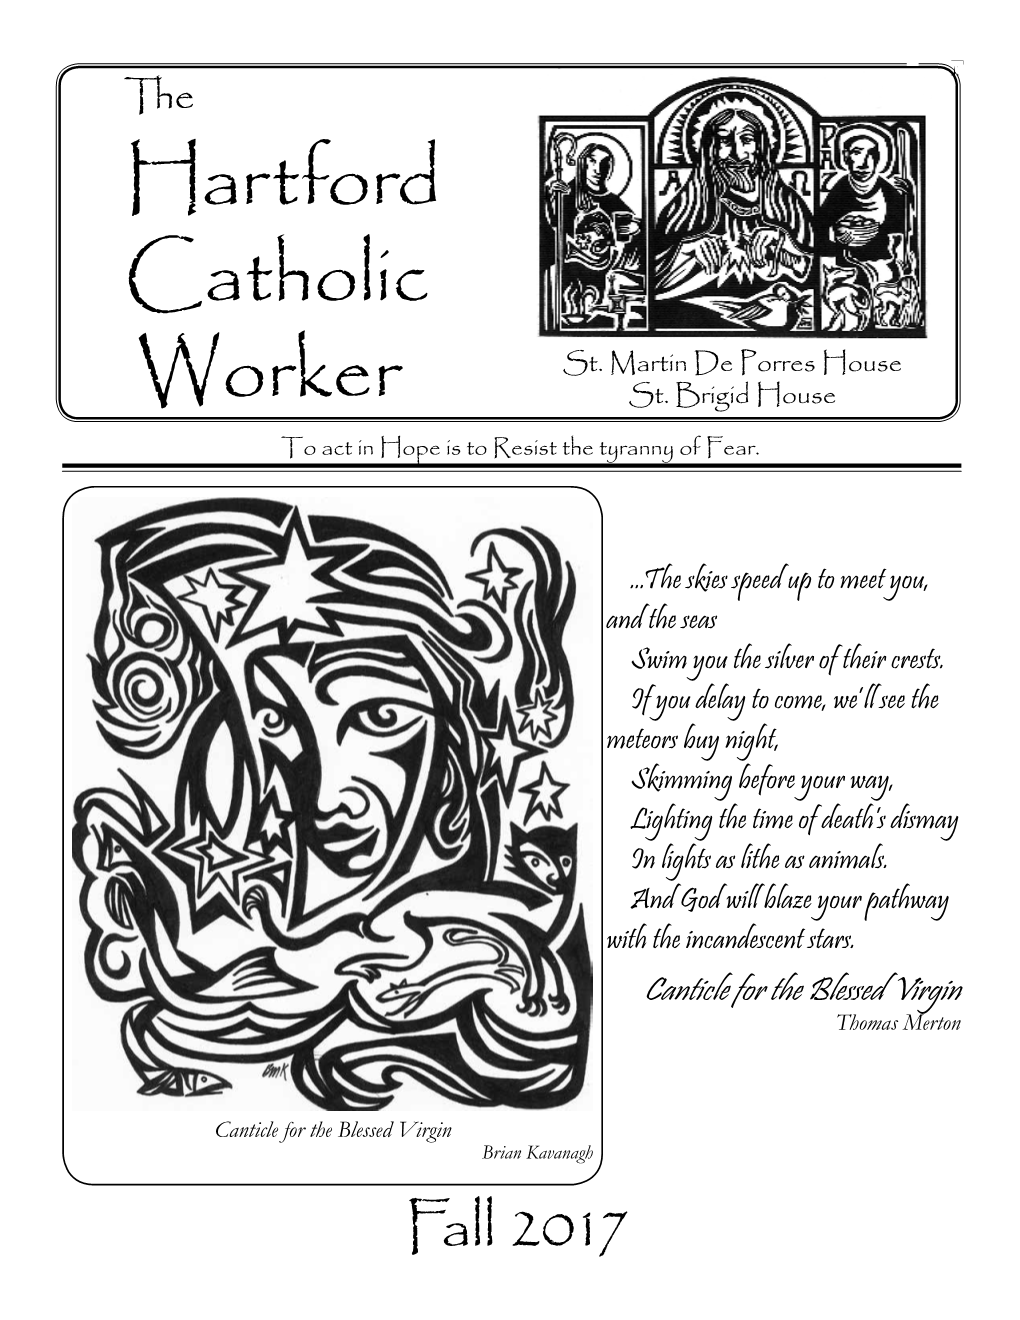 The Hartford Catholic Worker Established November 3, 1993 Volume 25 Number 3 the Hartford Catholic Worker Is Published Quarterly by the St